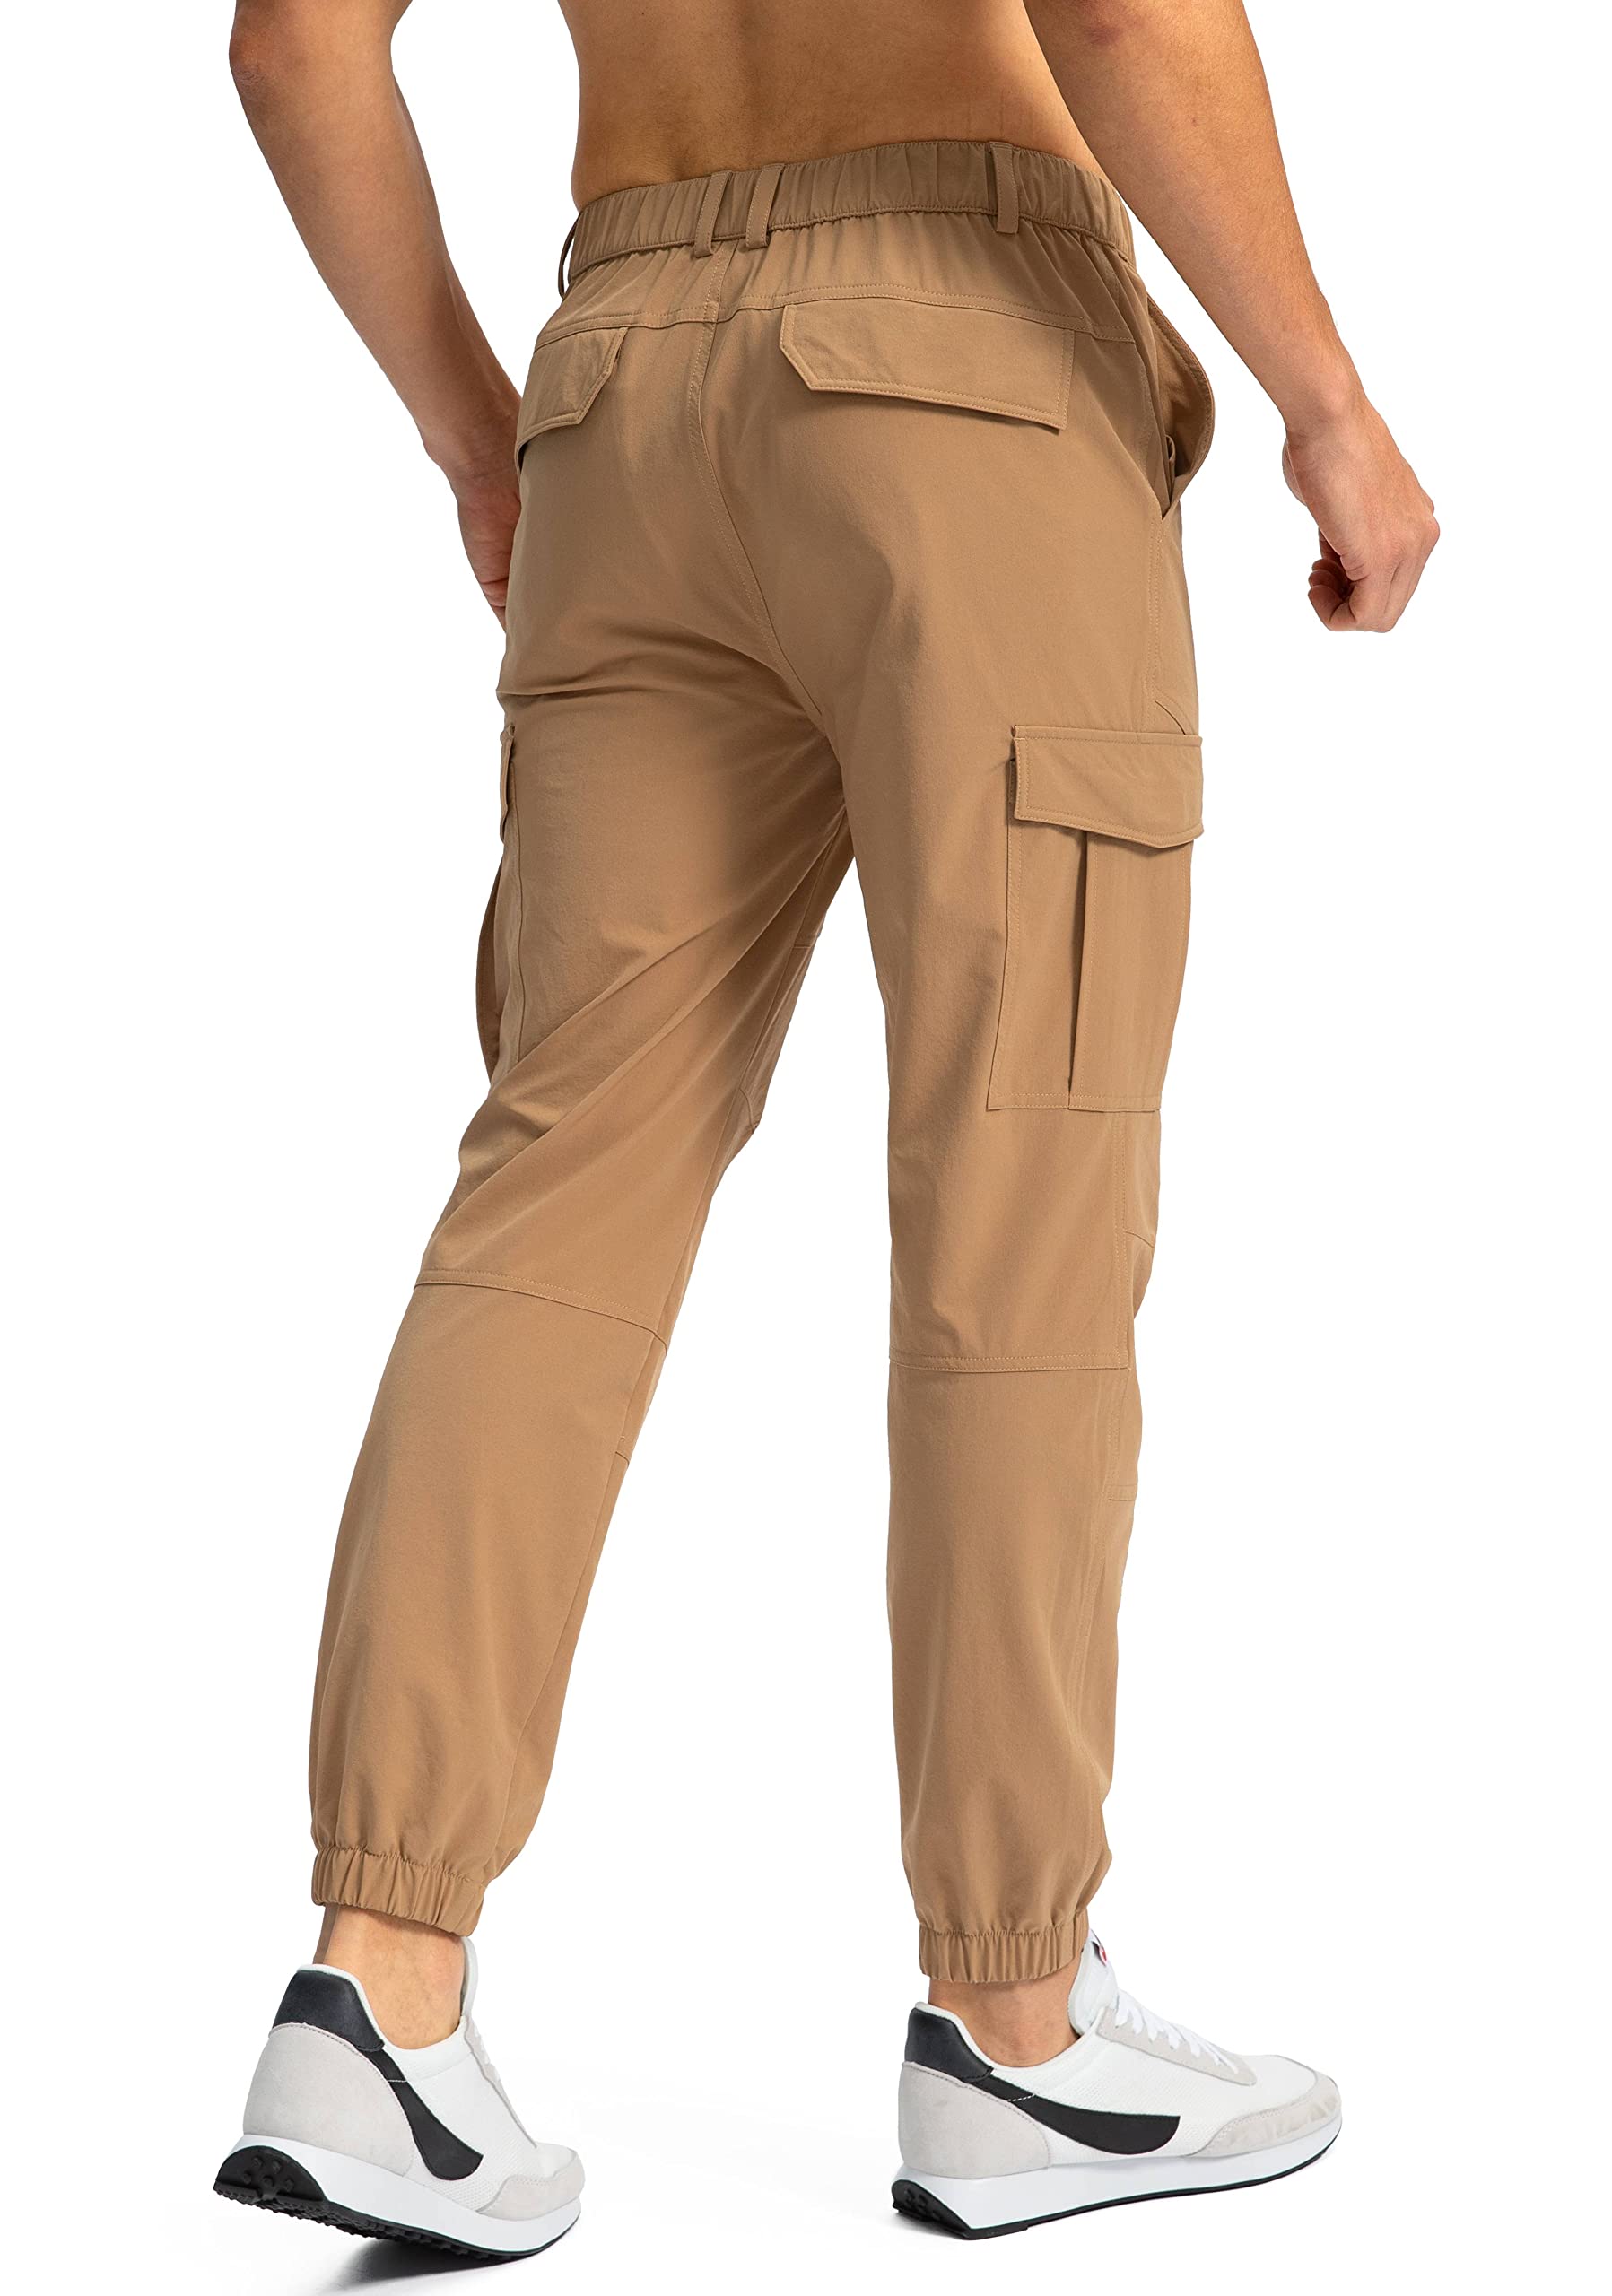 Pinkbomb Men's Hiking Cargo Pants with 7 Pockets Slim Fit Stretch Joggers Golf Cargo Work Pants for Men(Dark Khaki, S)